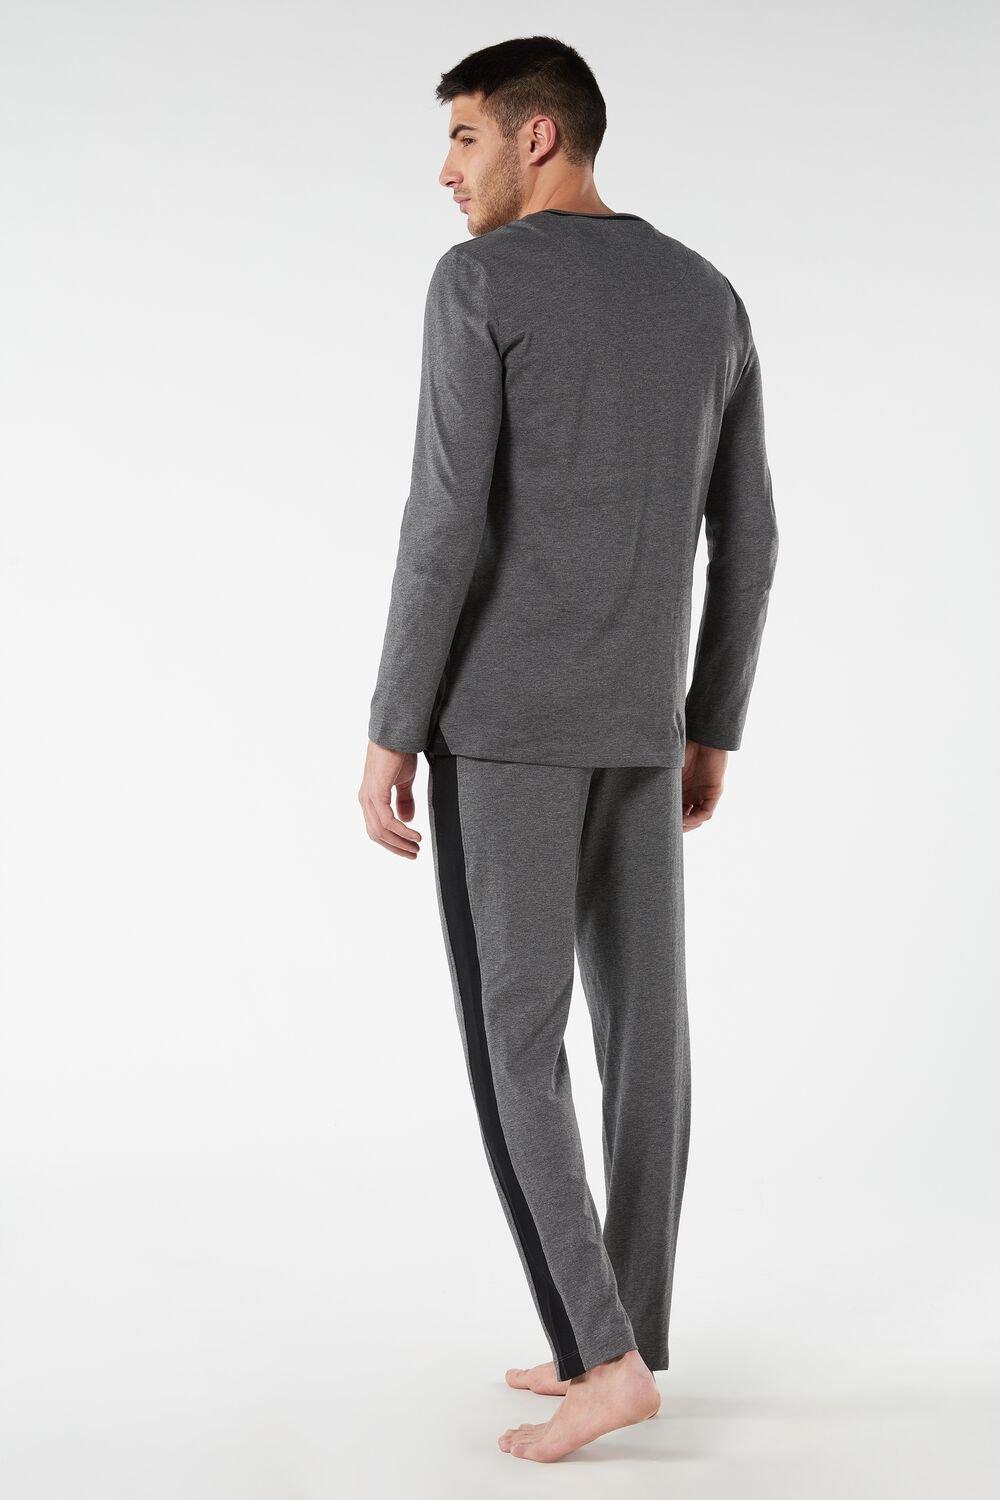 Intimissimi Basic Supima® Cotton Pajama Pant Set in Gray for Men - Lyst